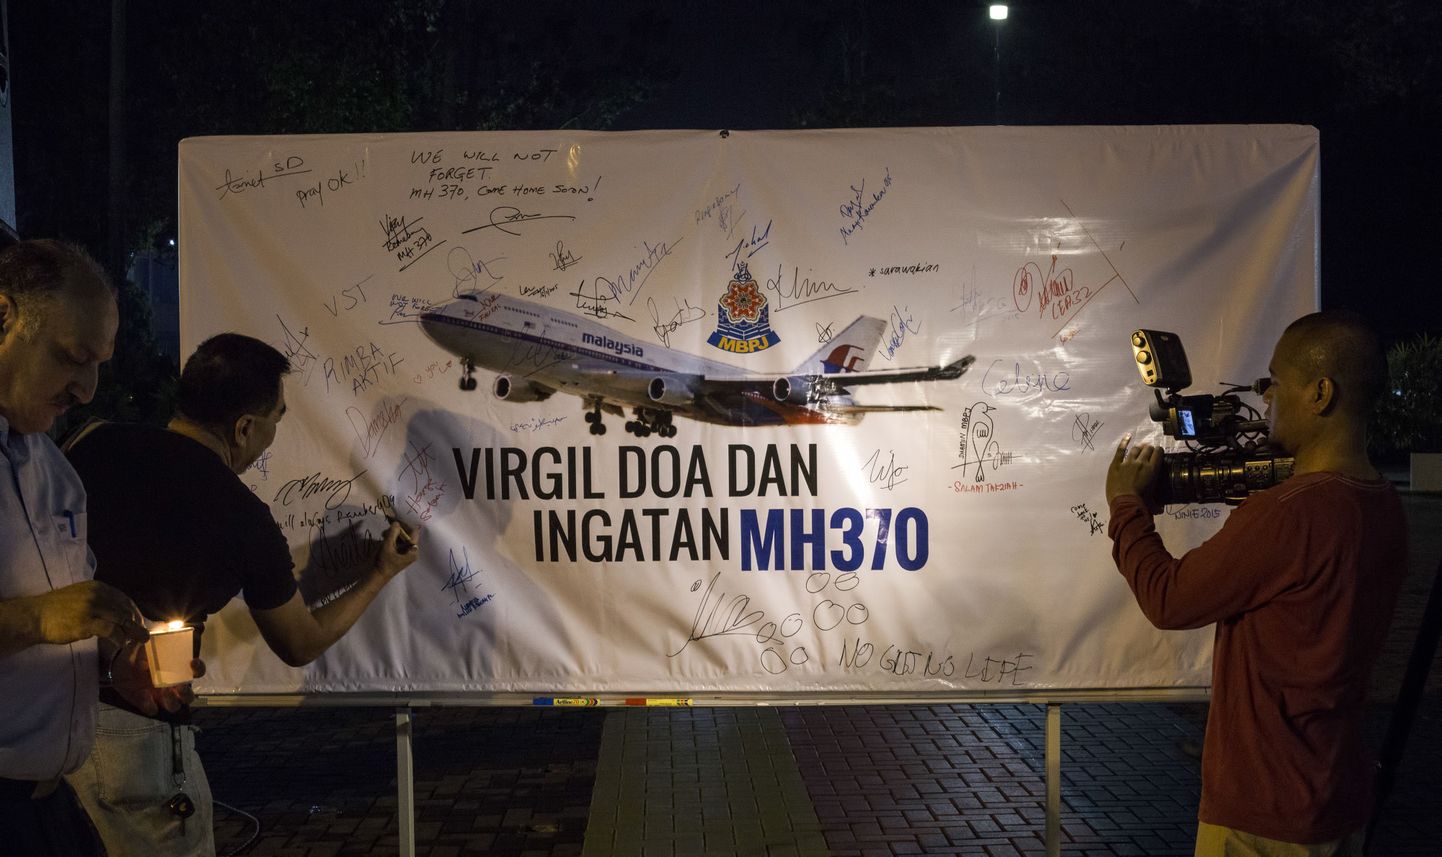 Firma Malaysian Airlines reisilennuki MH370 kadumisest möödub 8. märtsil aasta.